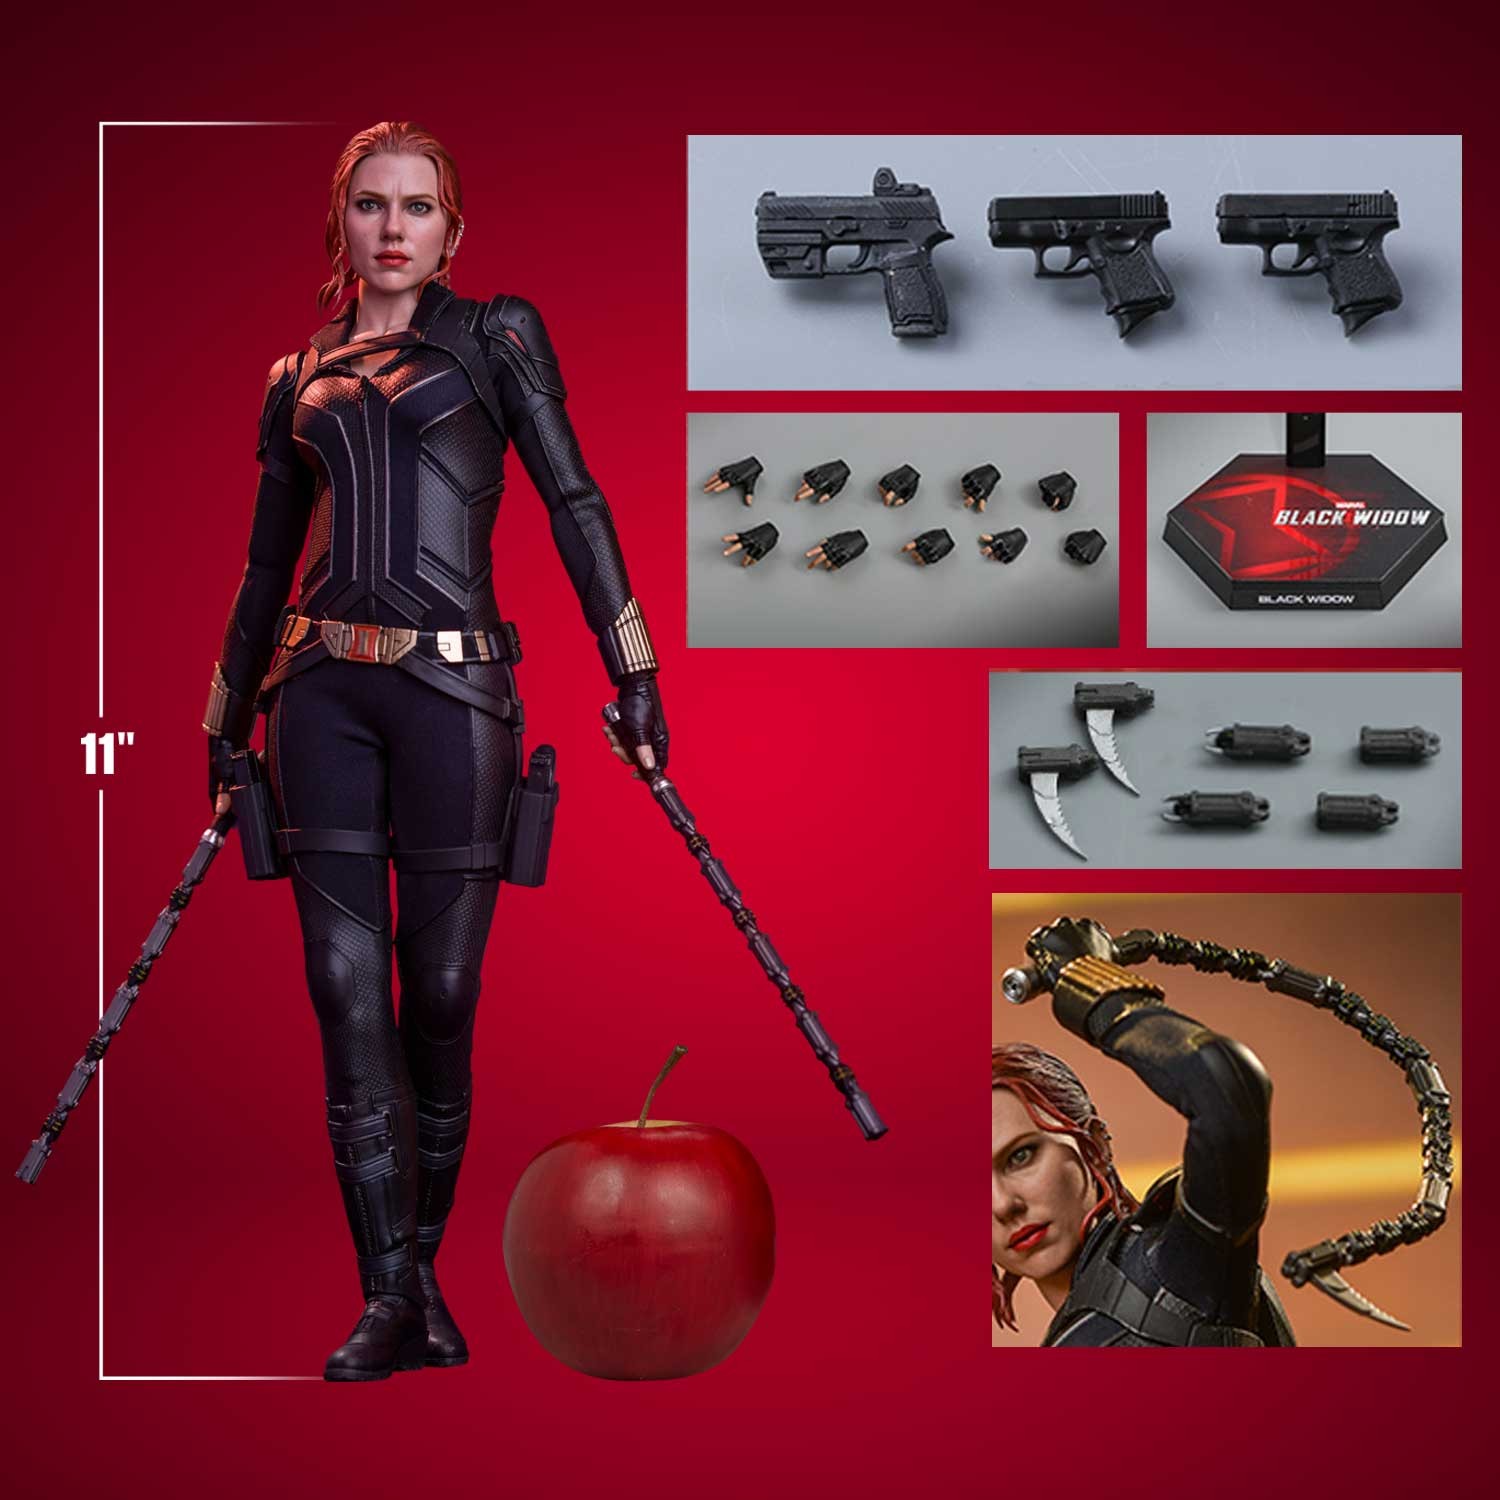 Black Widow Collector Edition - Prototype Shown